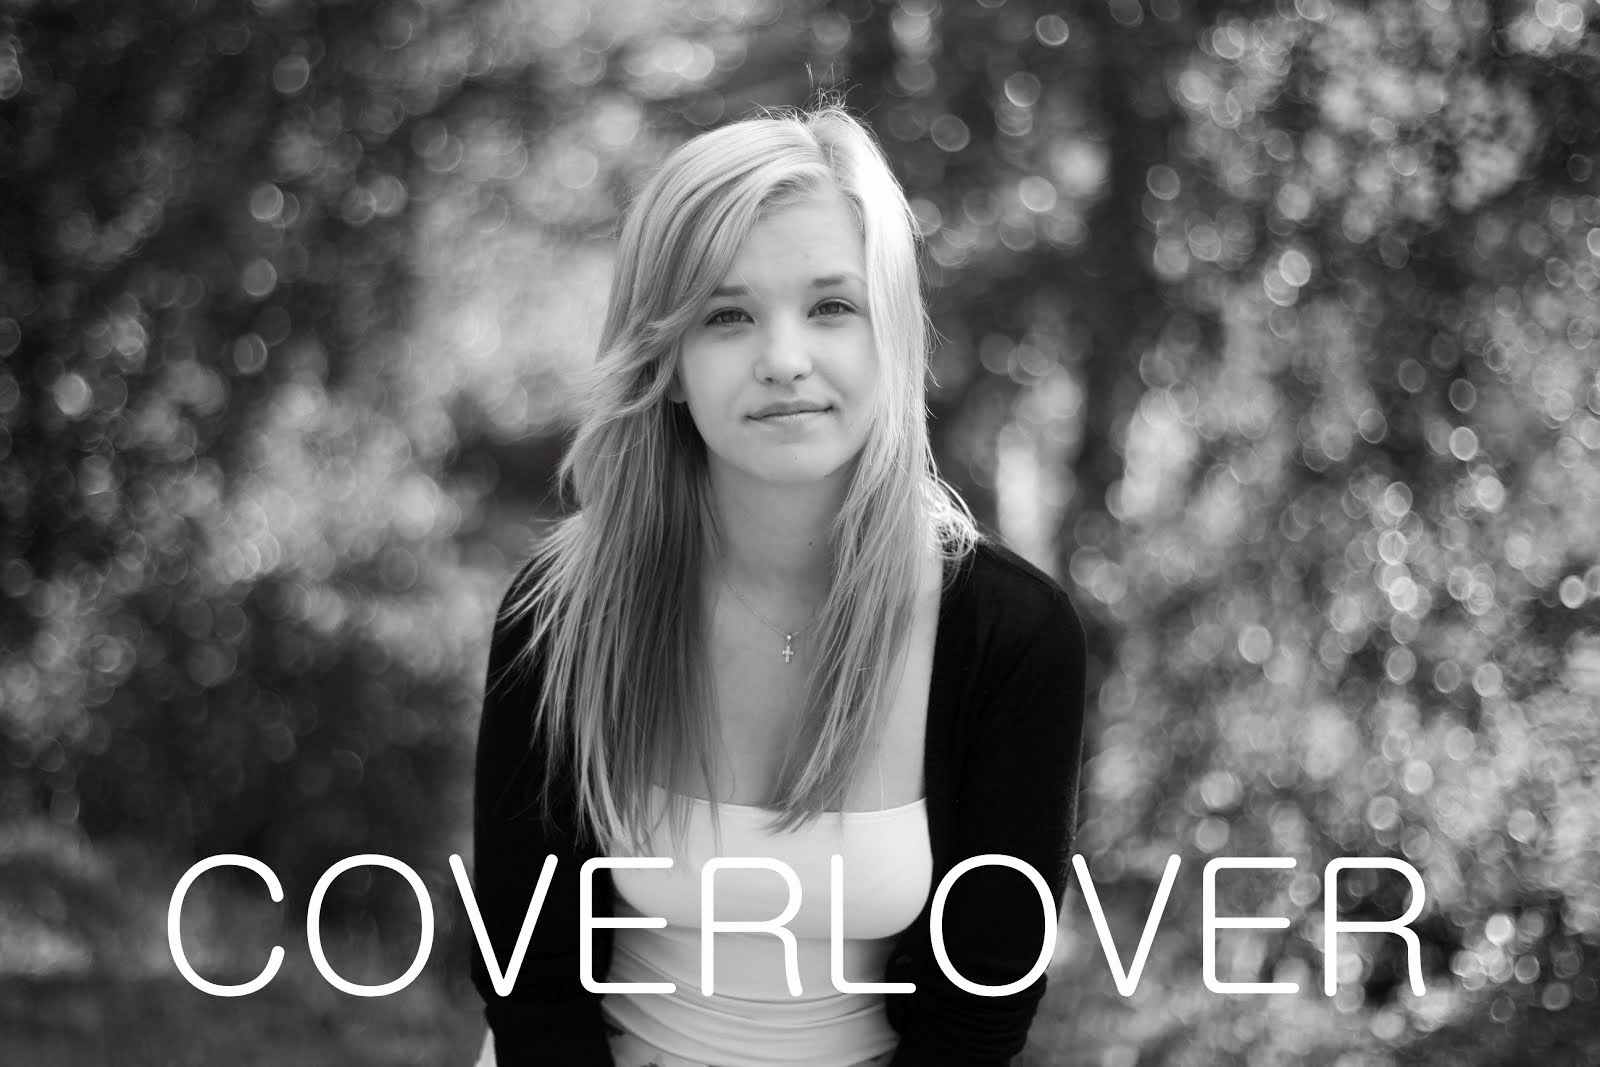 CoverLover